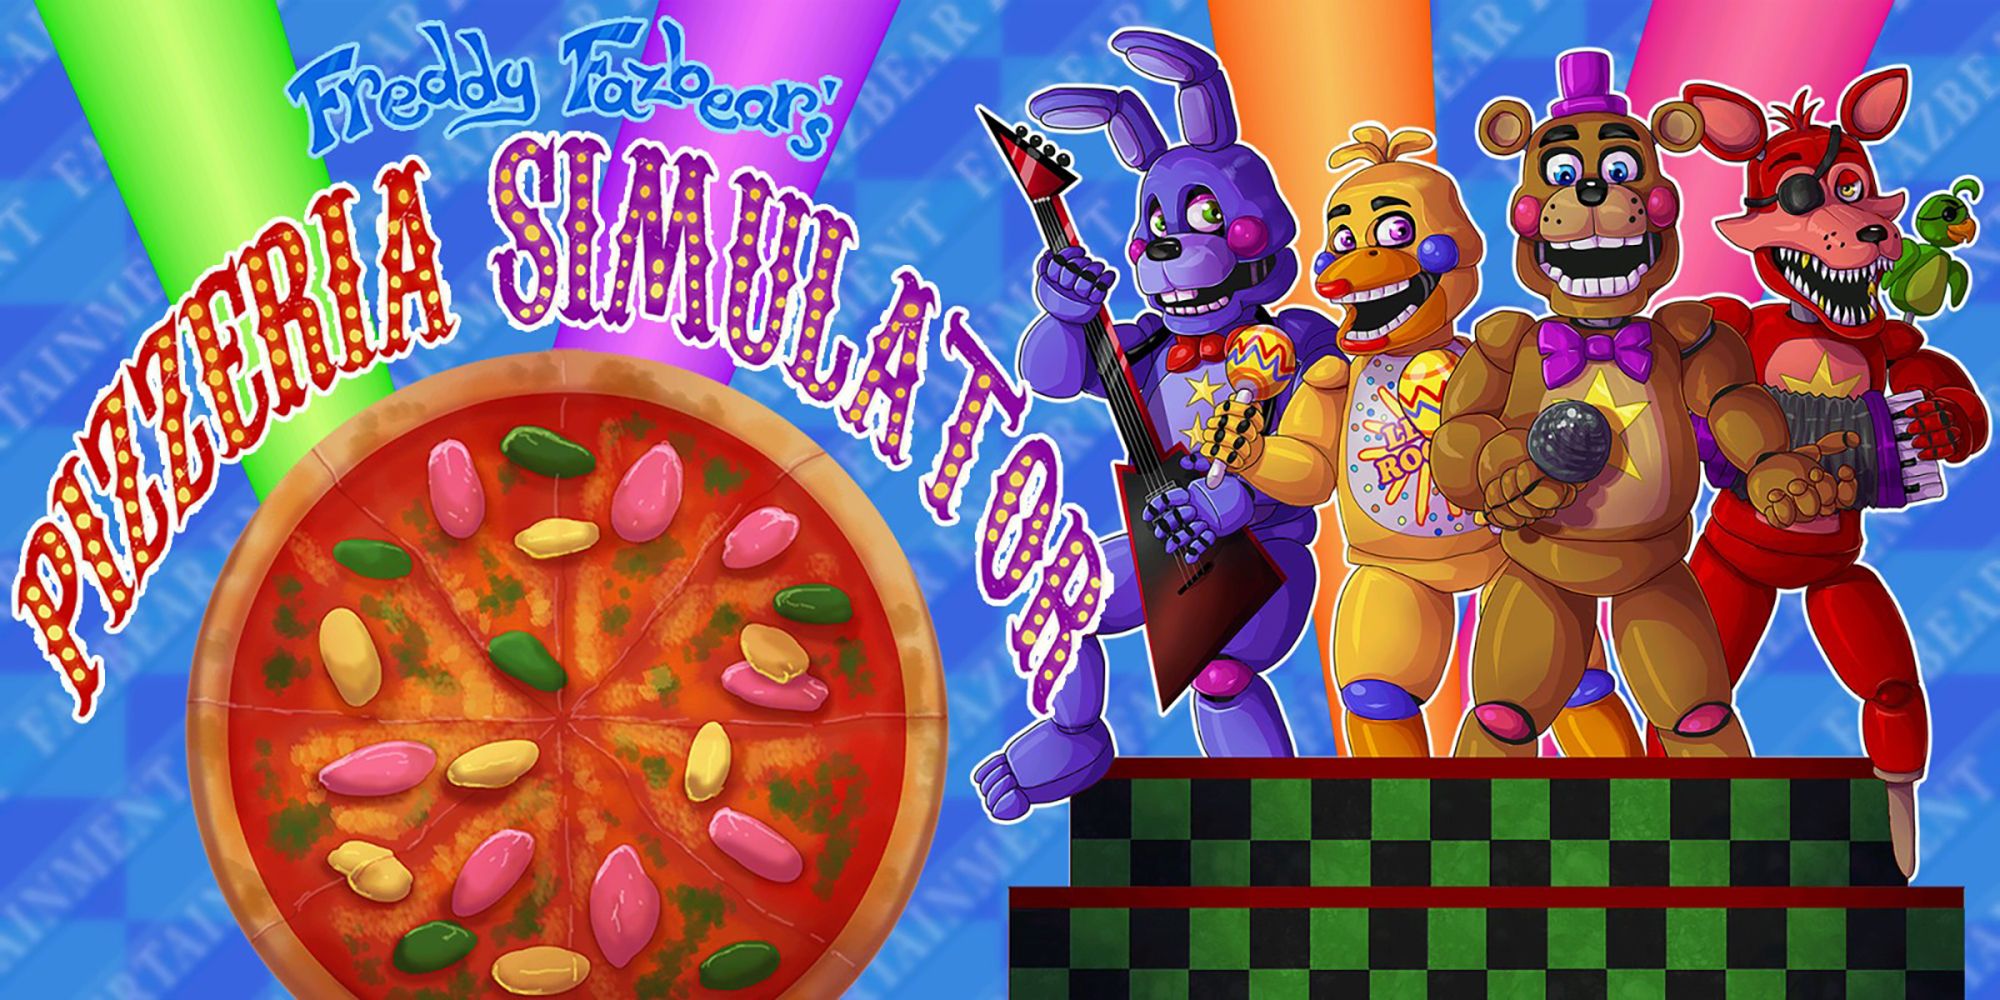 Freddy Fazbear's Pizzeria Simulator Poster